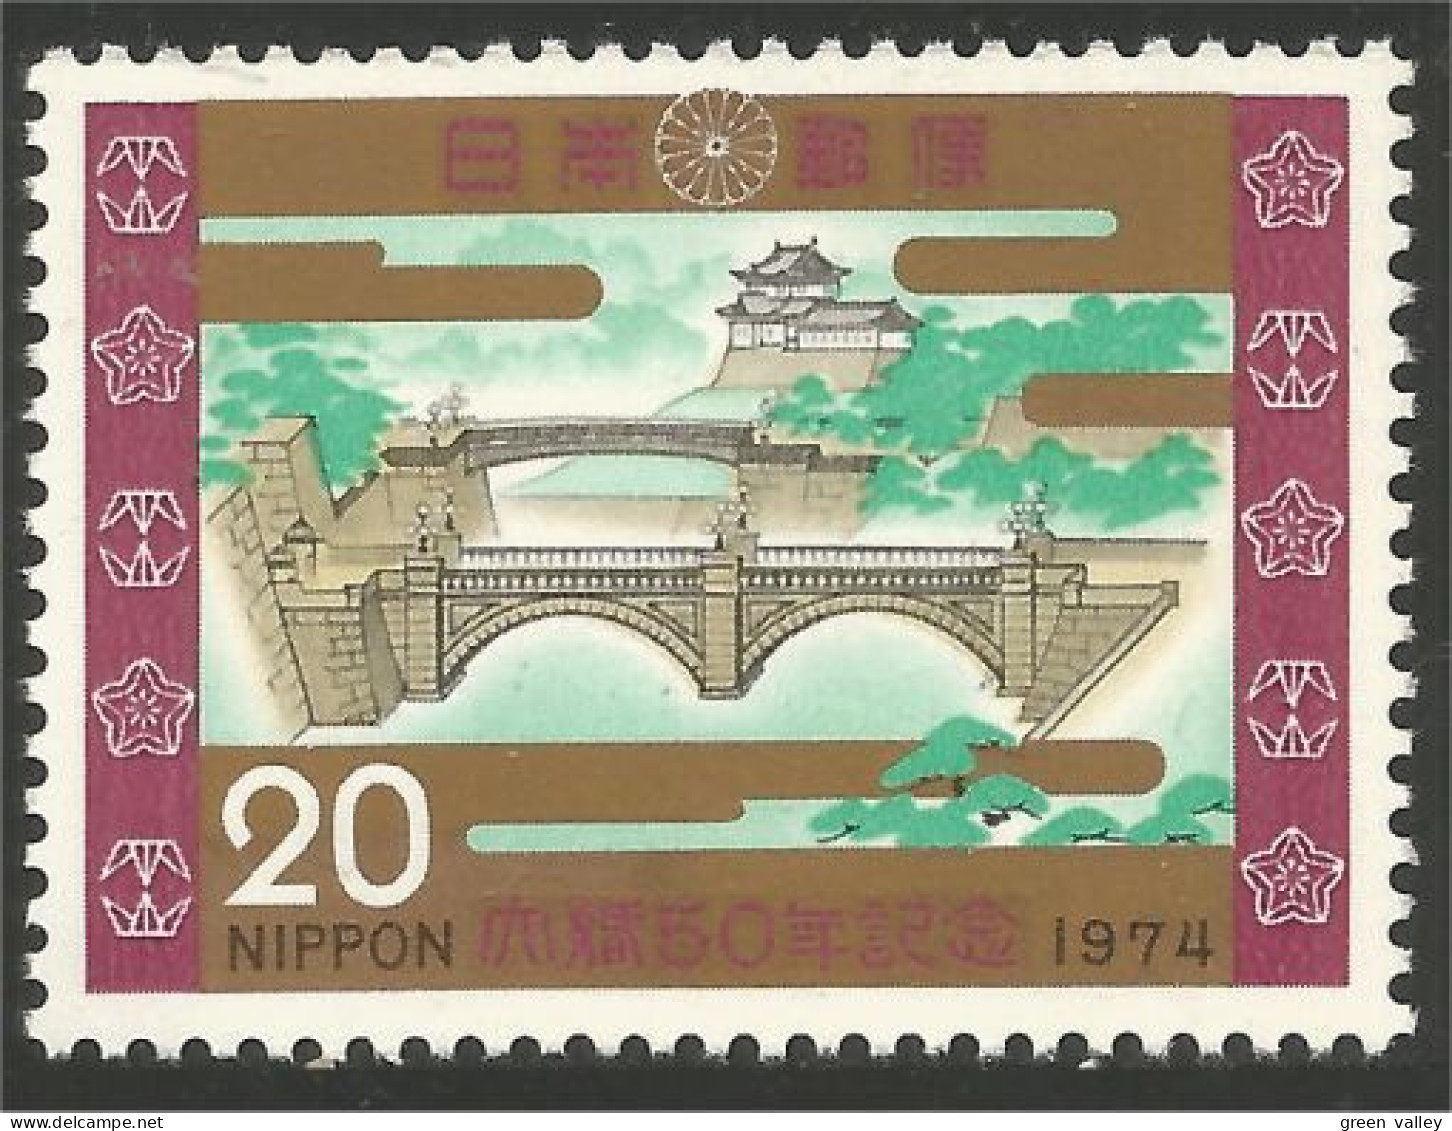 526 Japon Nijubashi Tokyo Mariage Wedding Hirohito Nagako MNH ** Neuf SC (JAP-616a) - Unused Stamps